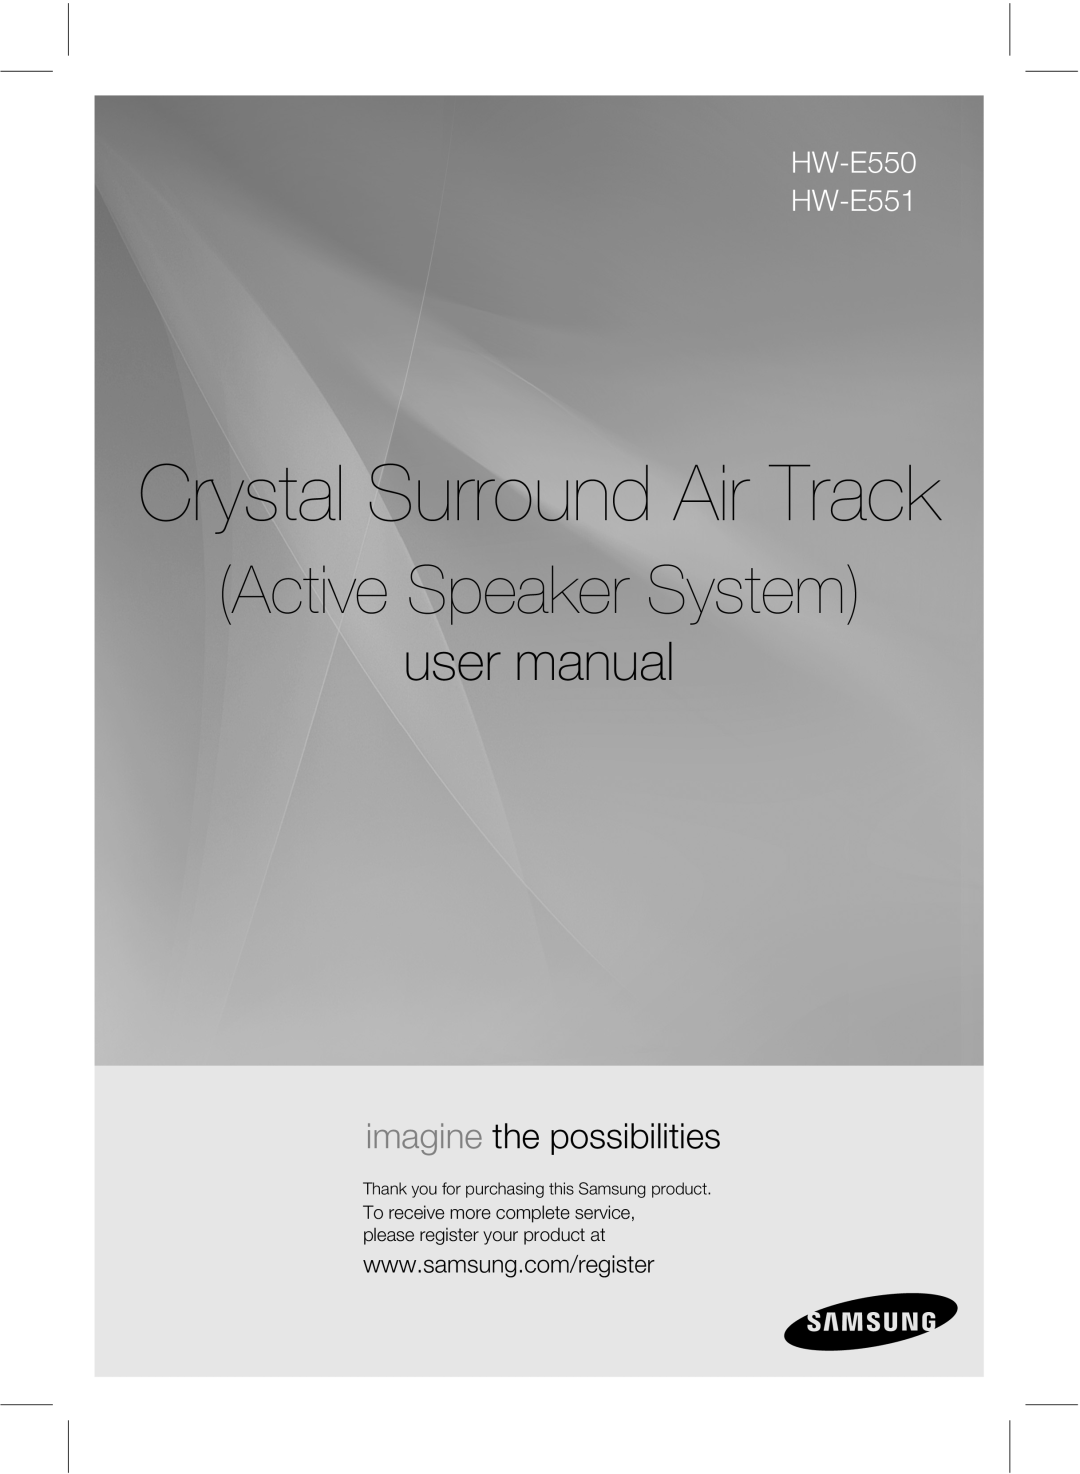 Samsung HWE550 manual XxxTbntvohDpnSfhjtufs, Crystal Surround Air Track, Active Speaker System, VtfsNbovbm 